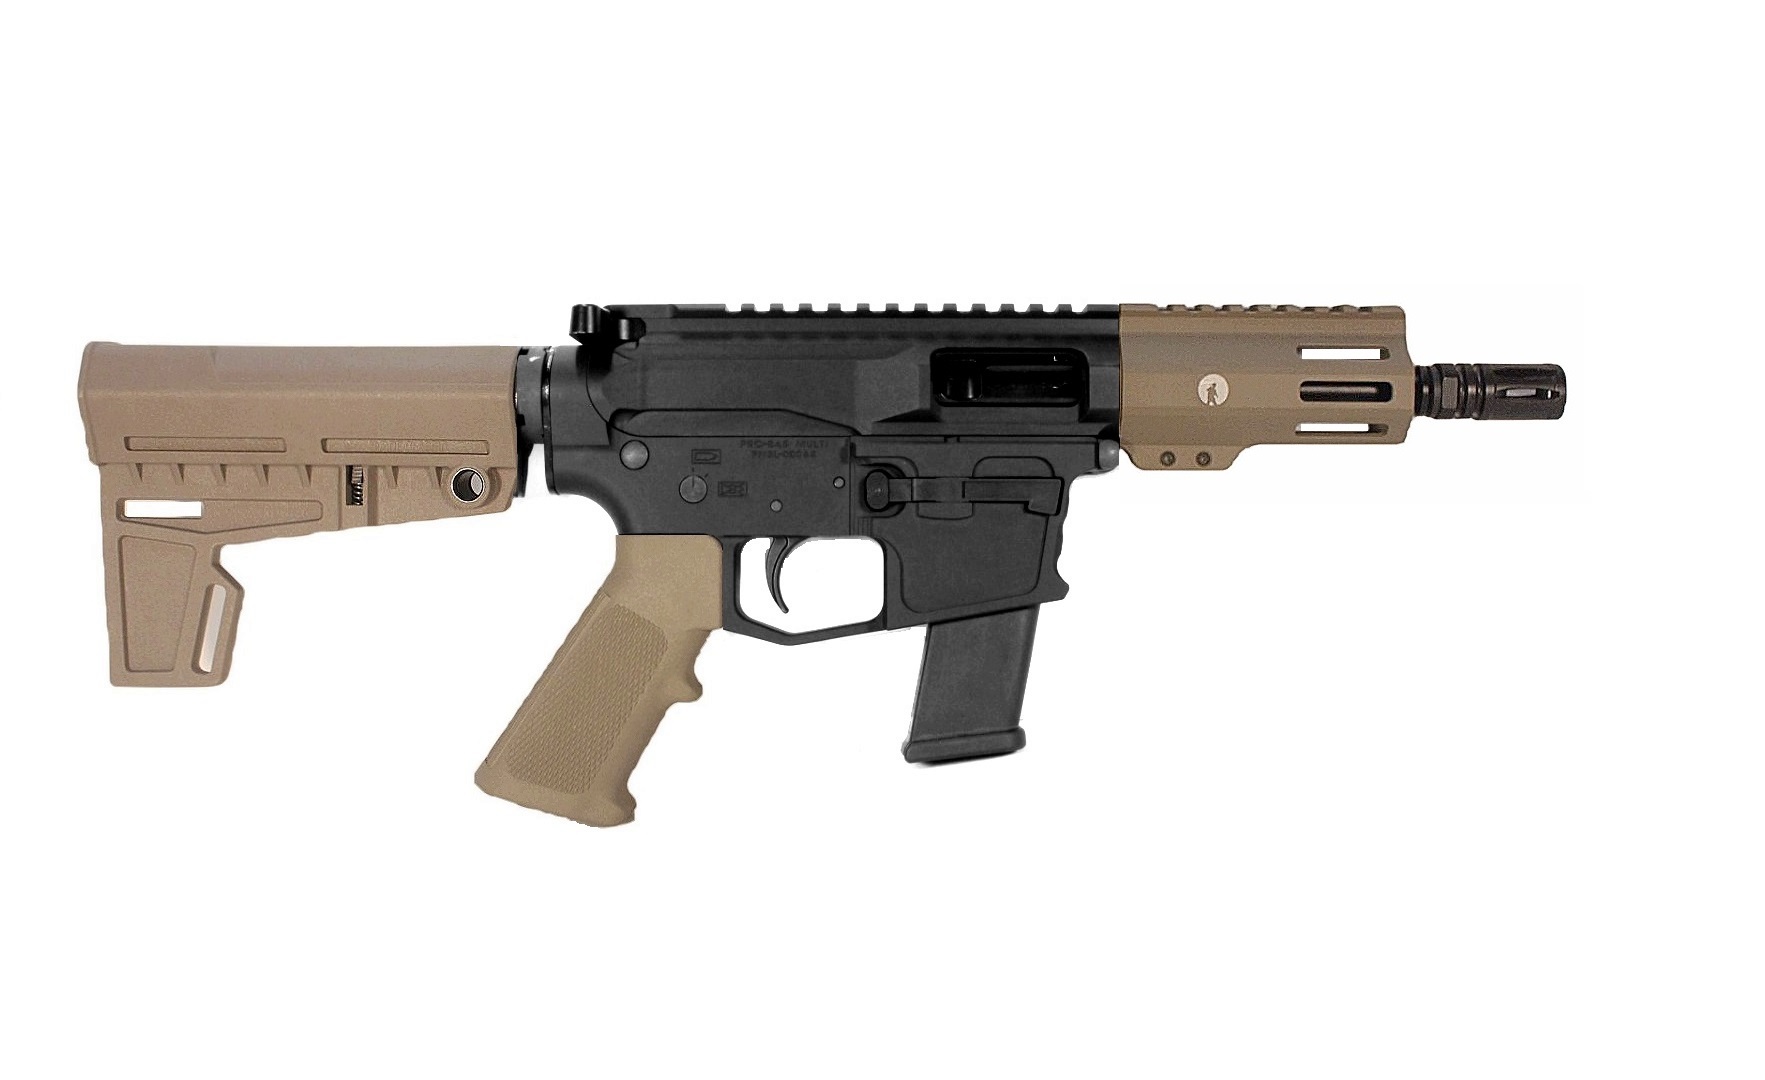 5 inch 10mm AR15 Pistol in BLK/FDE